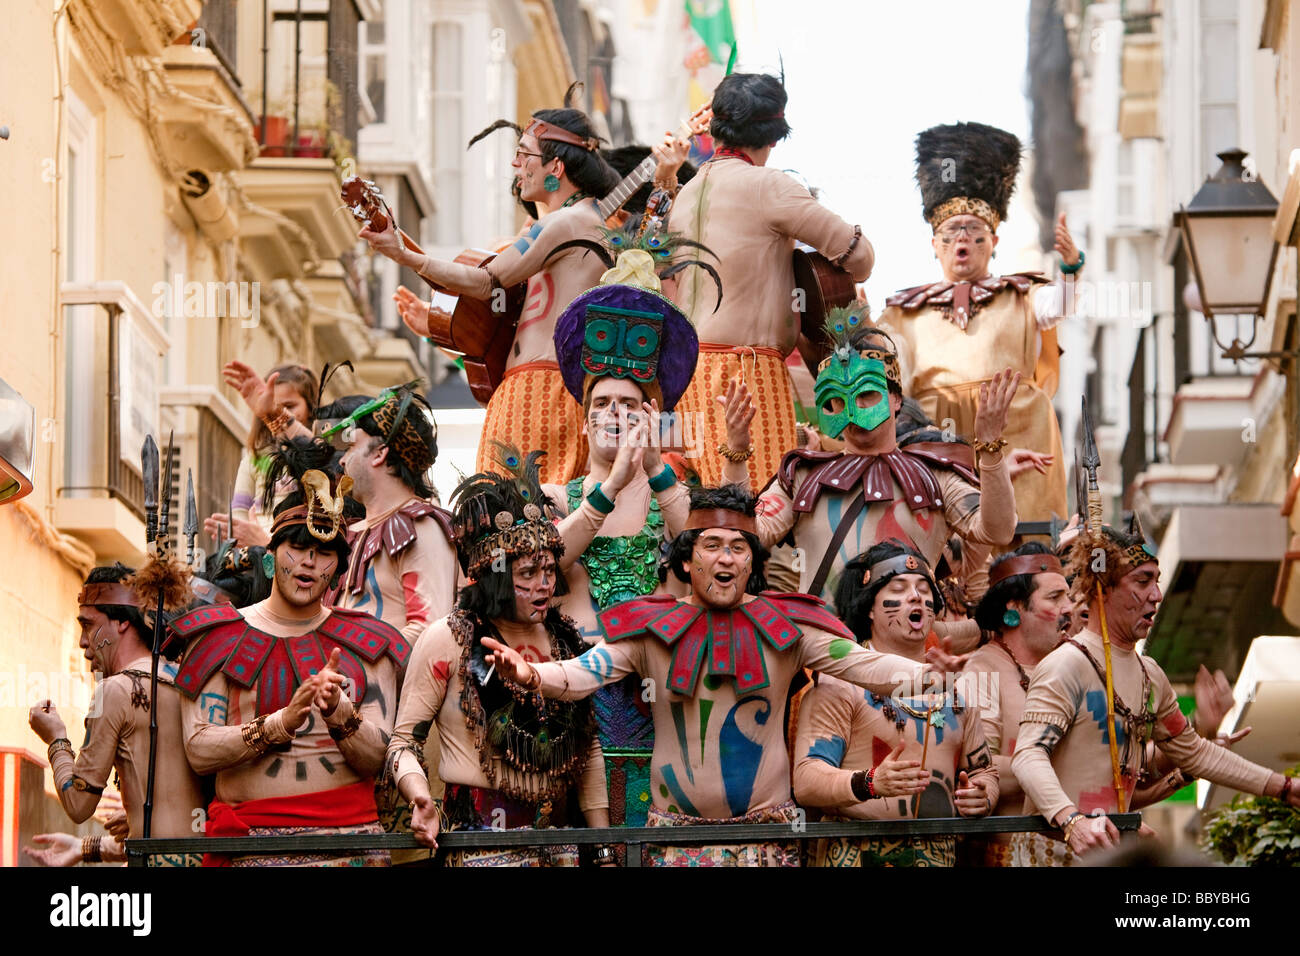 Carrusel en los Coros de carnavals de Cádiz andalousie España chorales dans le carrousel carnavals de Cadiz Andalousie Espagne Banque D'Images